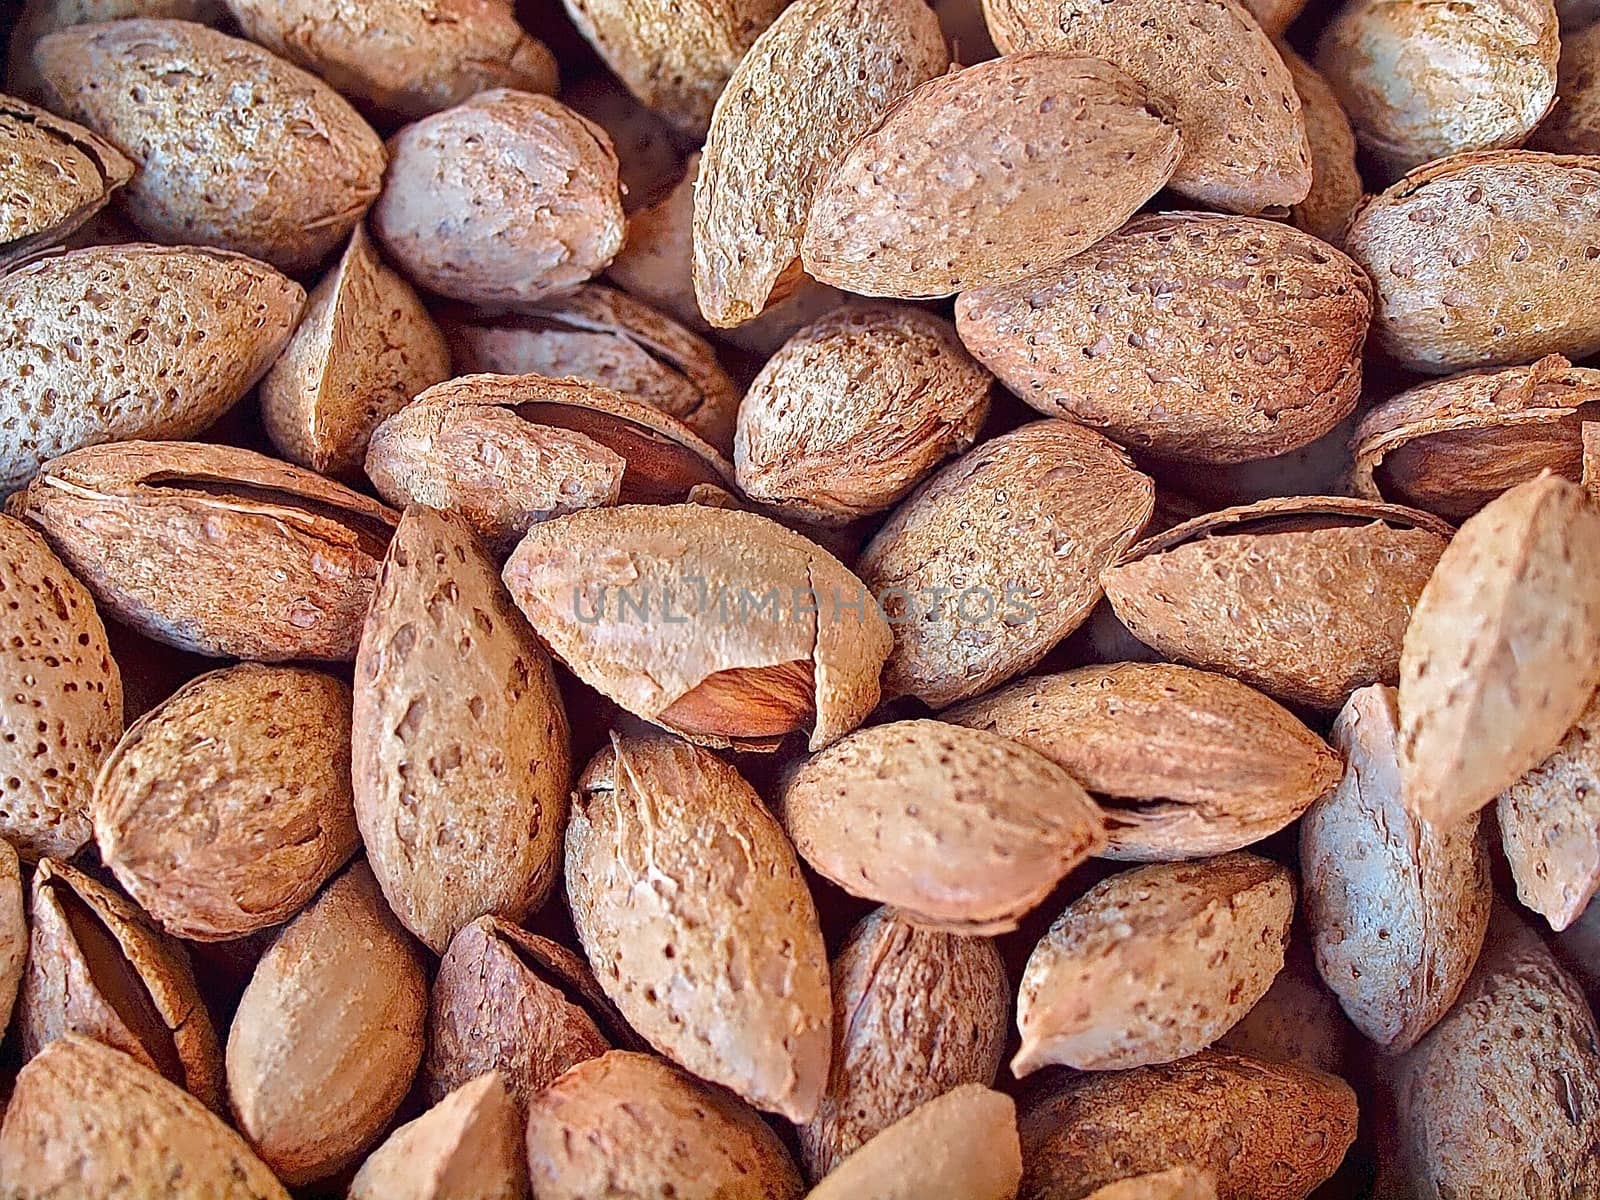 Macro of fresh almonds in nutshells